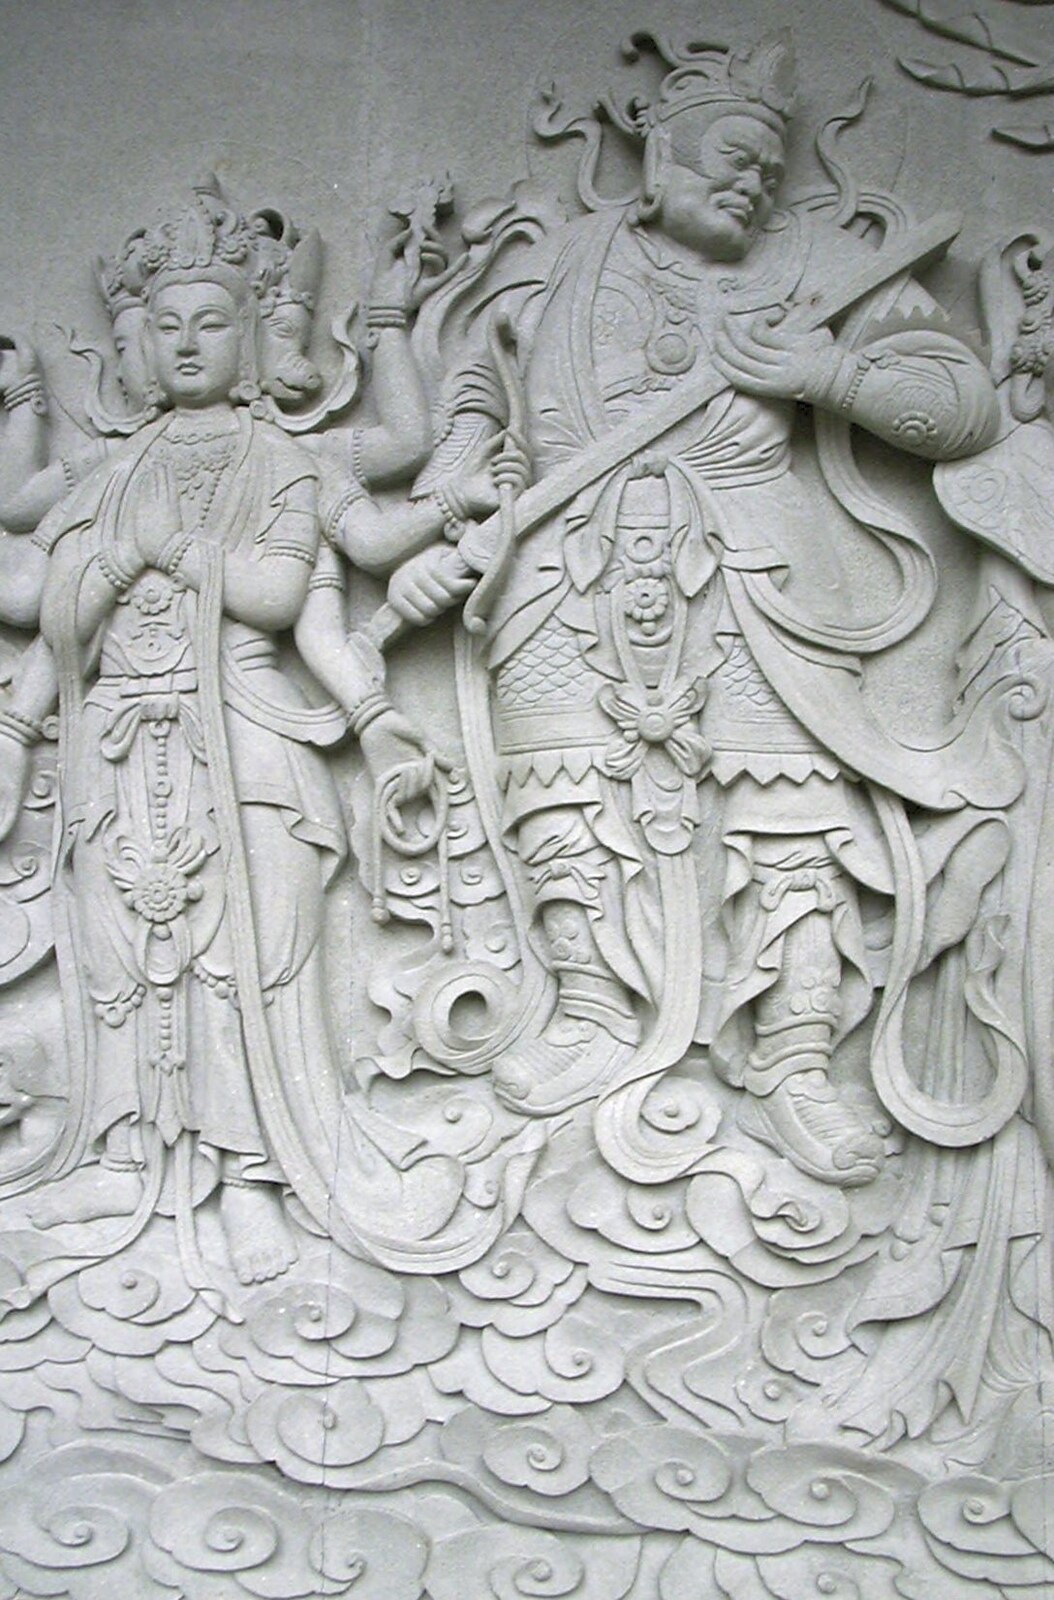 Lantau Island and the Po Lin Monastery, Hong Kong, China - 14th August 2001: More carvings